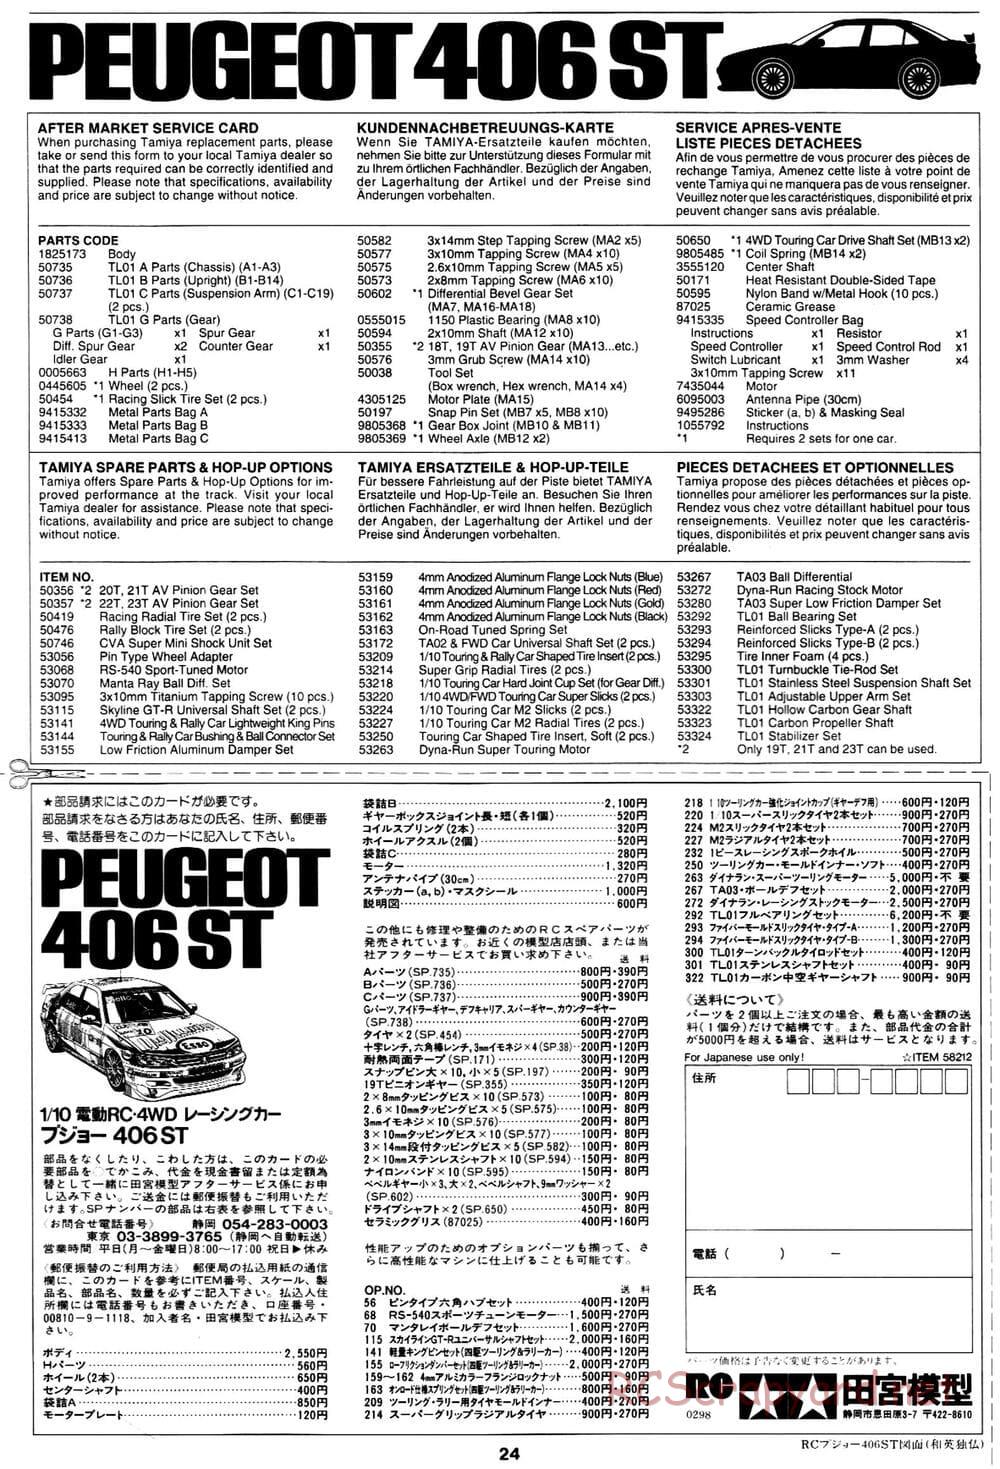 Tamiya - Peugeot 406 ST - TL-01 Chassis - Manual - Page 24